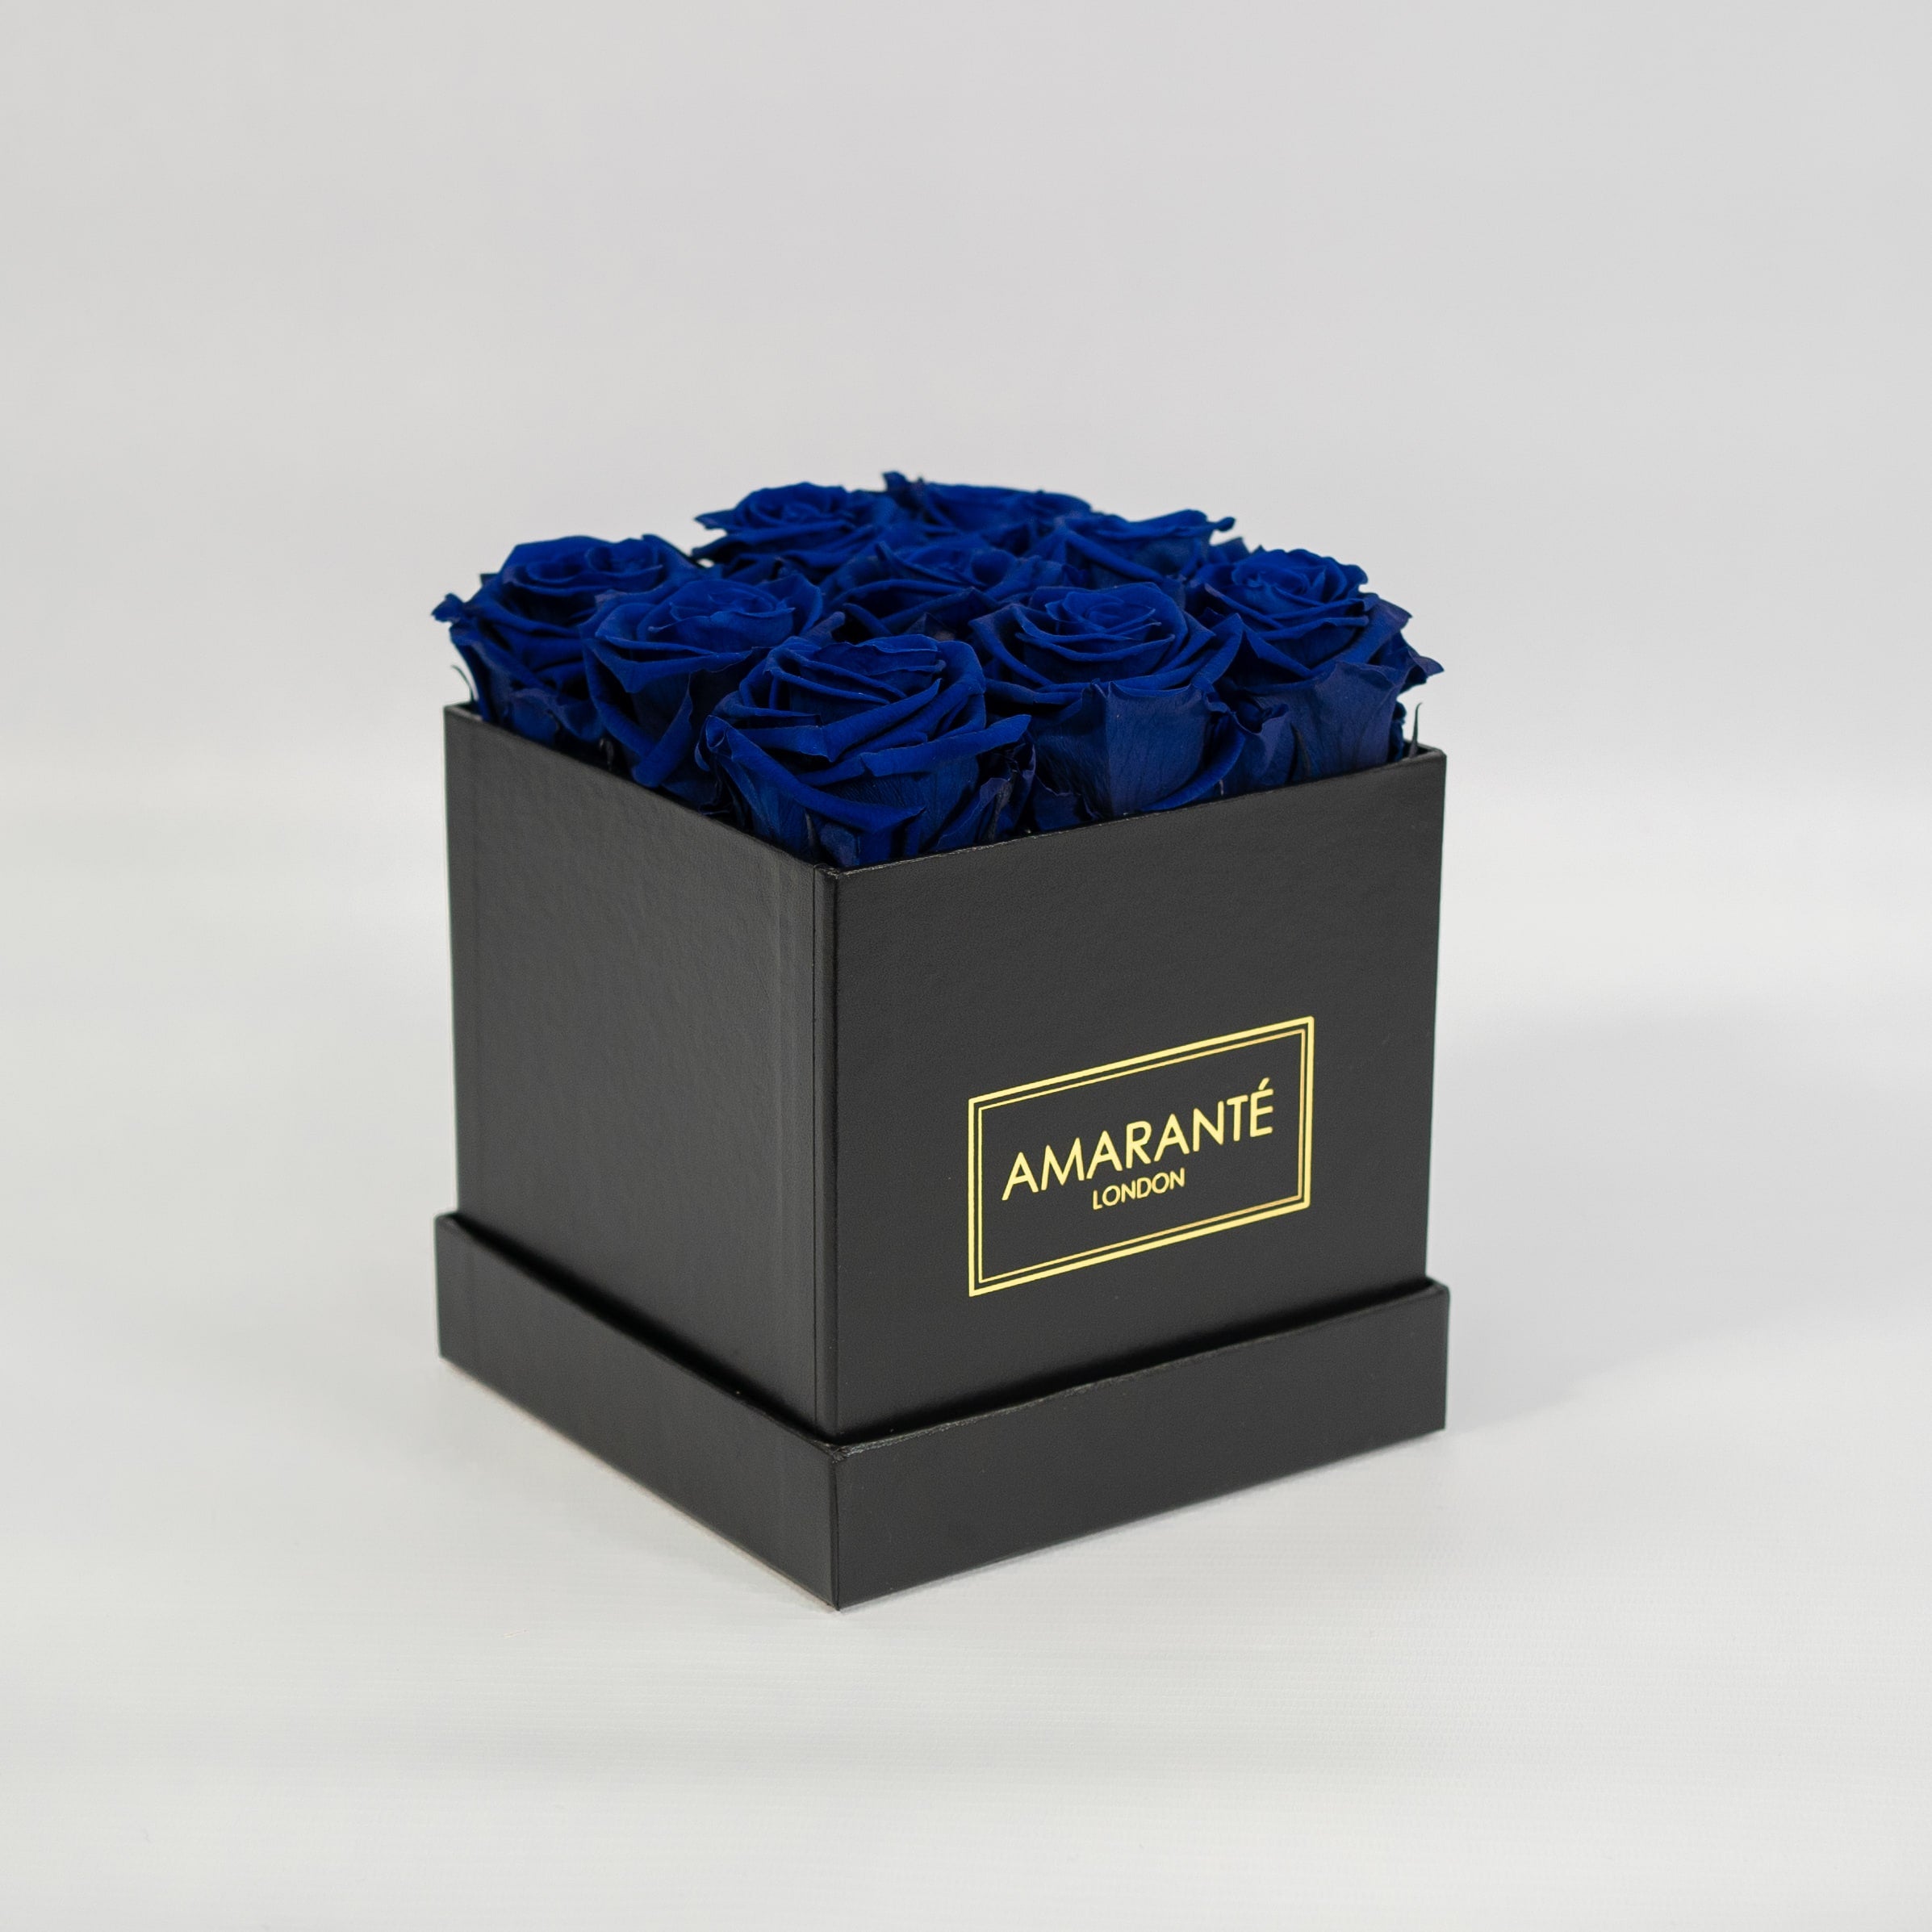 Stylish royal blue roses denoting luxury and royalty. 